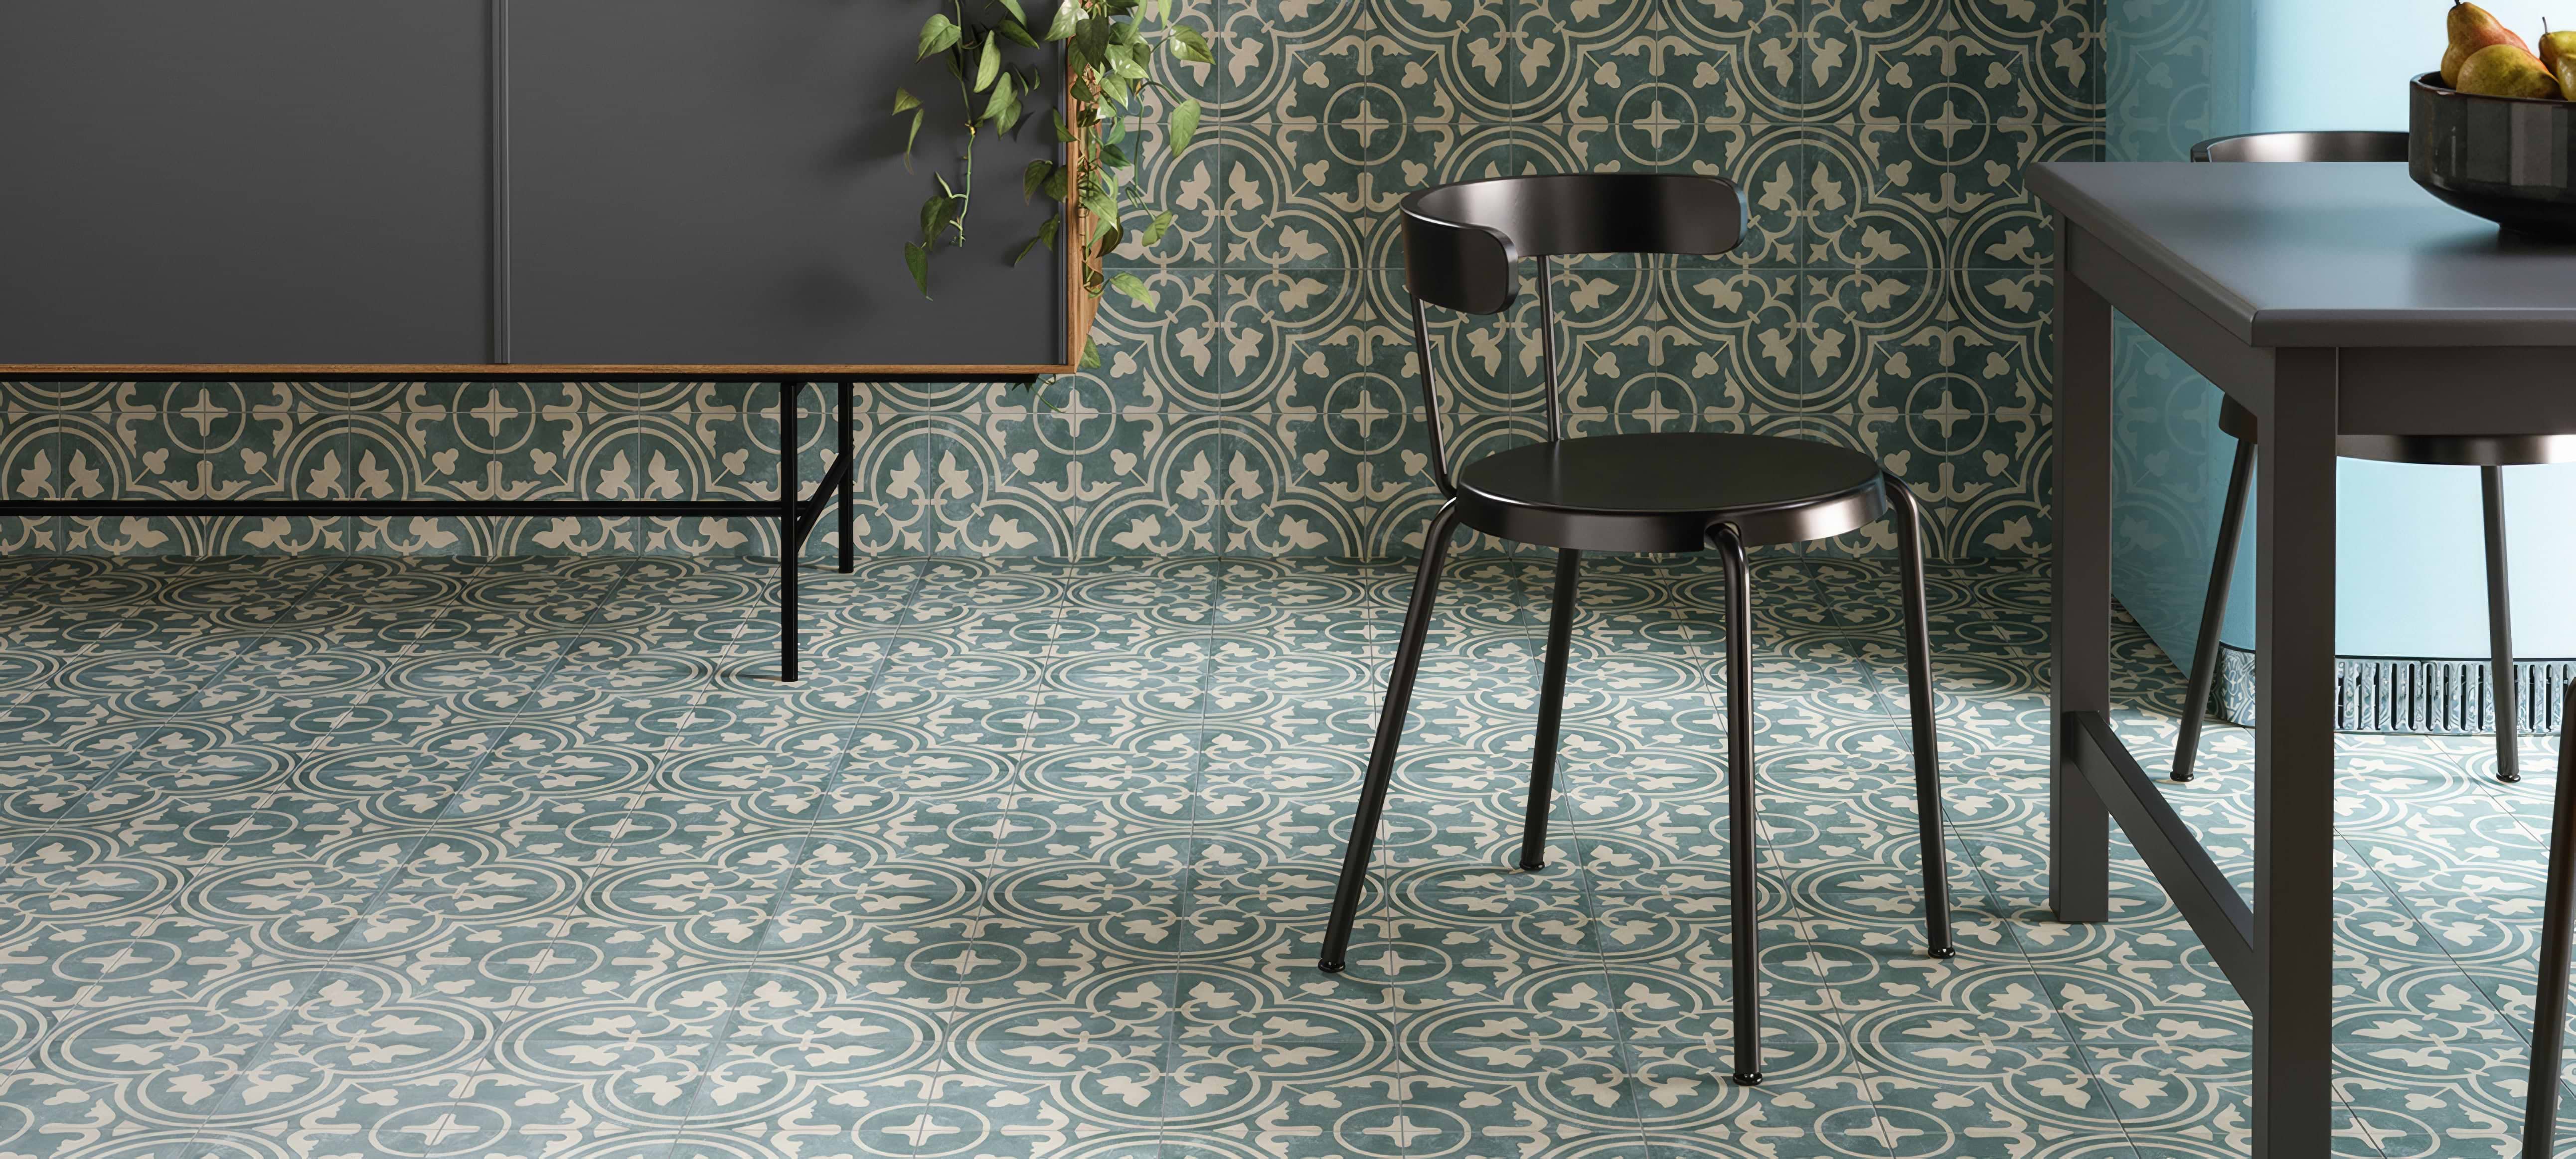 Venti Classic Carpet 2 - Hyperion Tiles